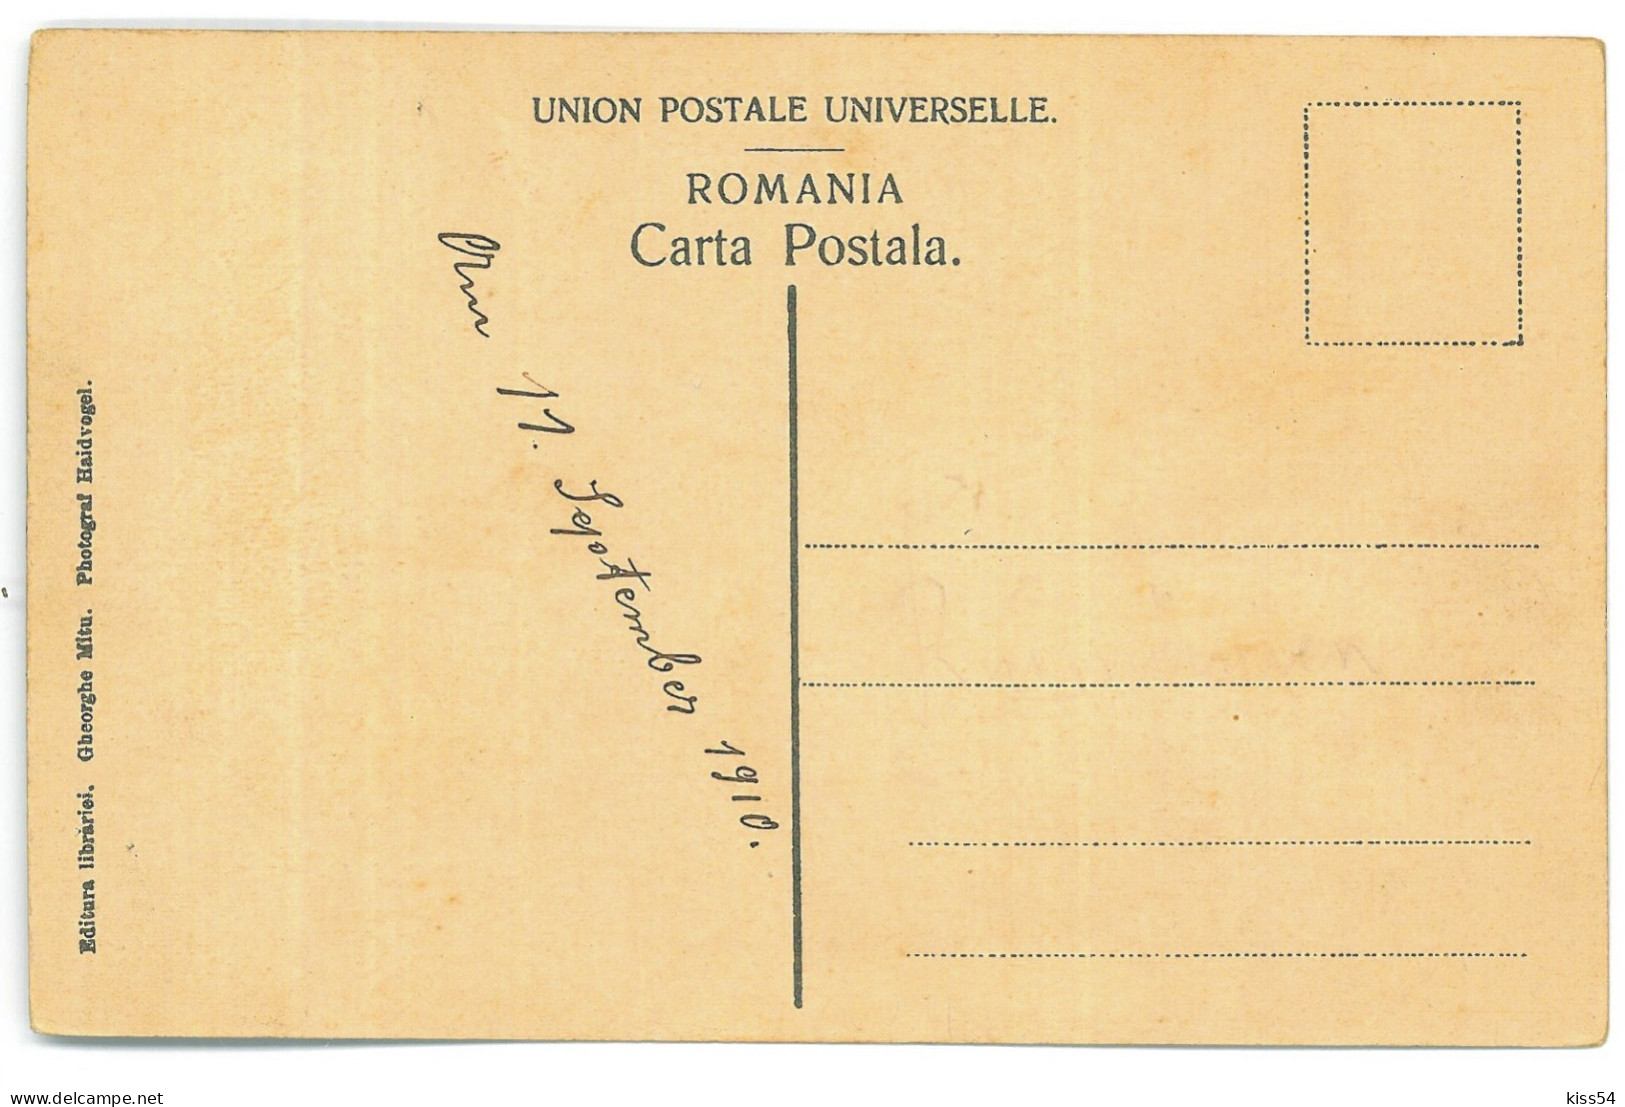 RO 84 - 20405 CURTEA De ARGES, Monastery, Romania - Old Postcard - Unused - Romania